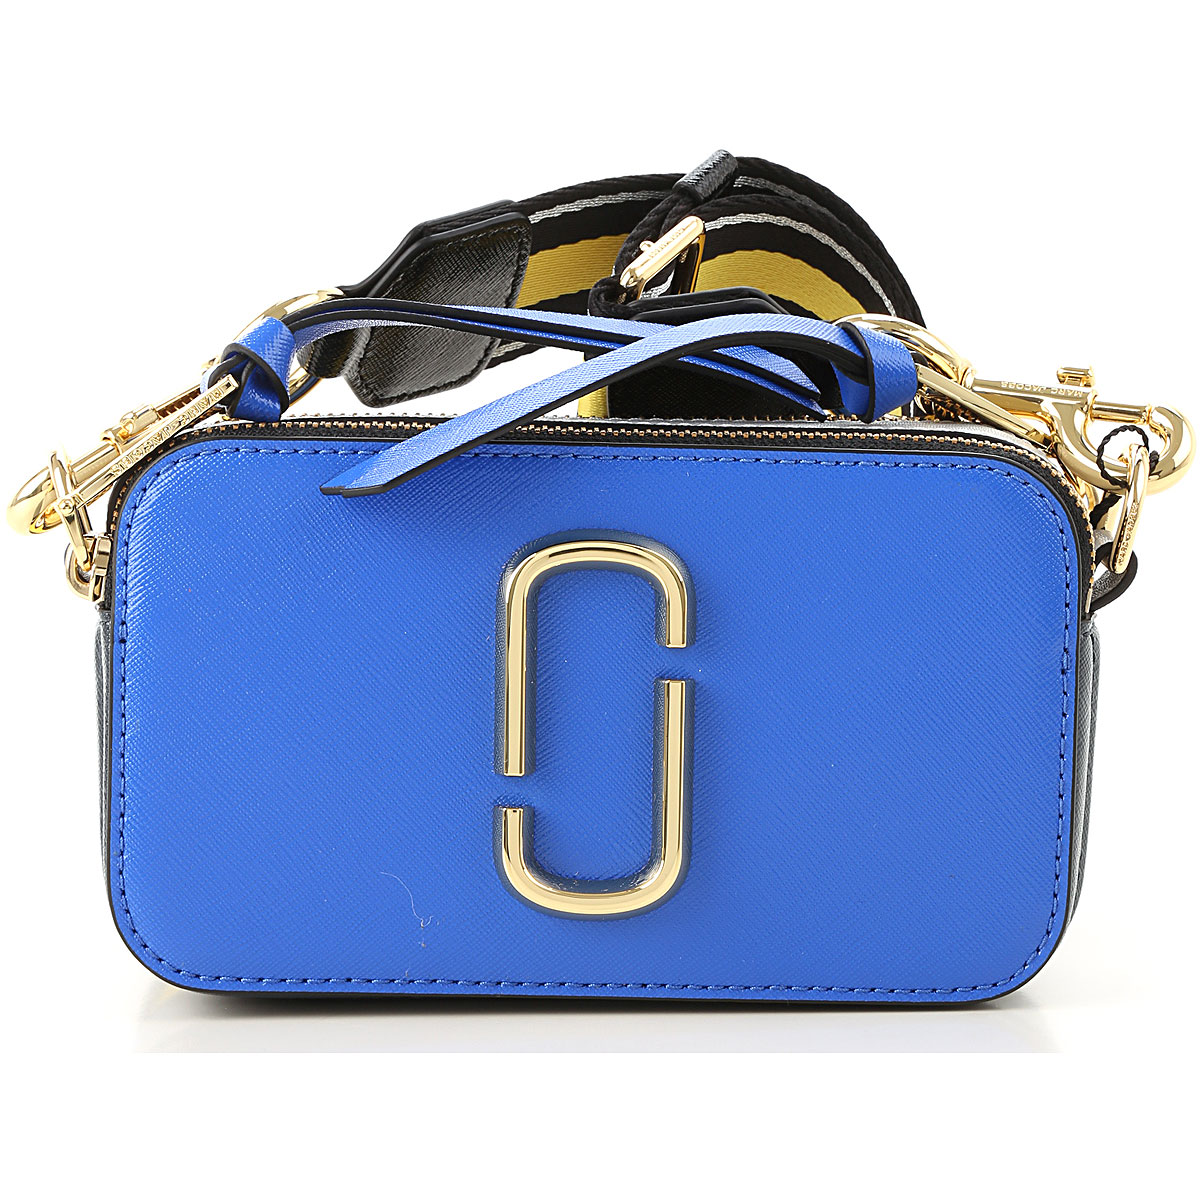 Handbags Marc Jacobs, Style code: m0012007-494-A721